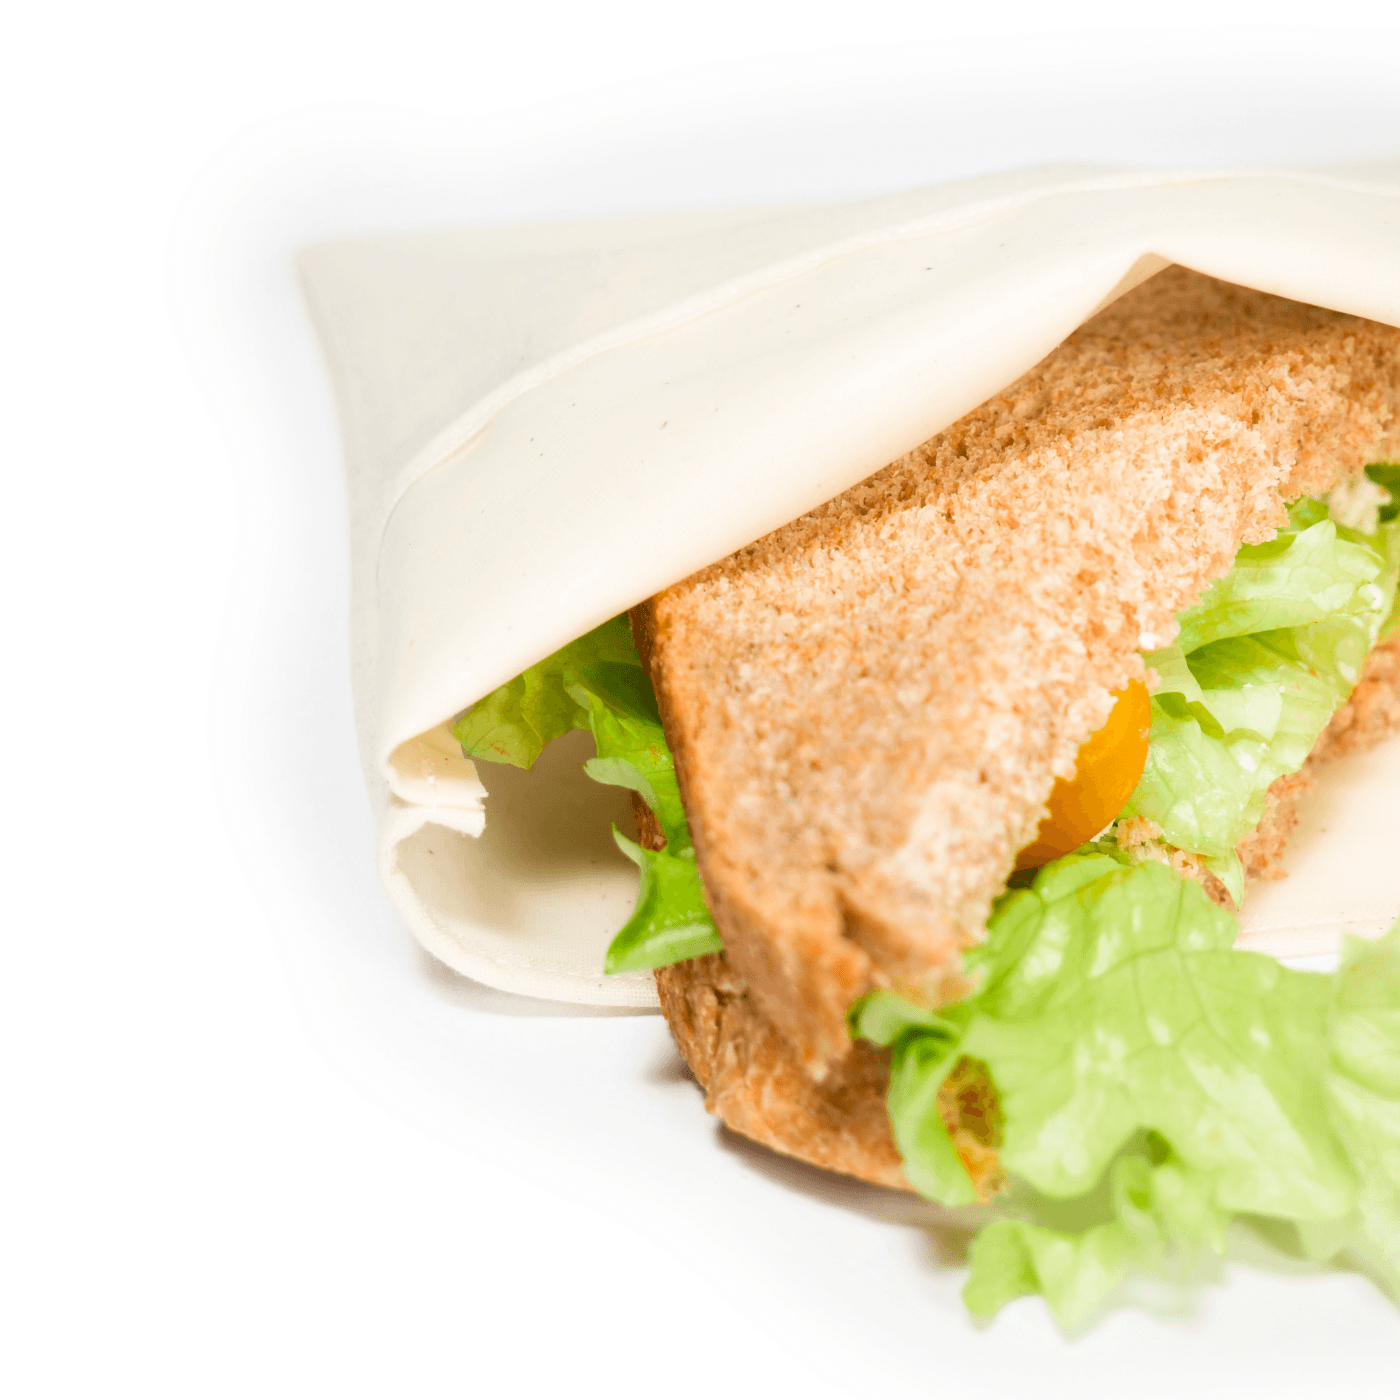 Reusable silicone cotton bag that preserves a sandwich to achieve zero waste